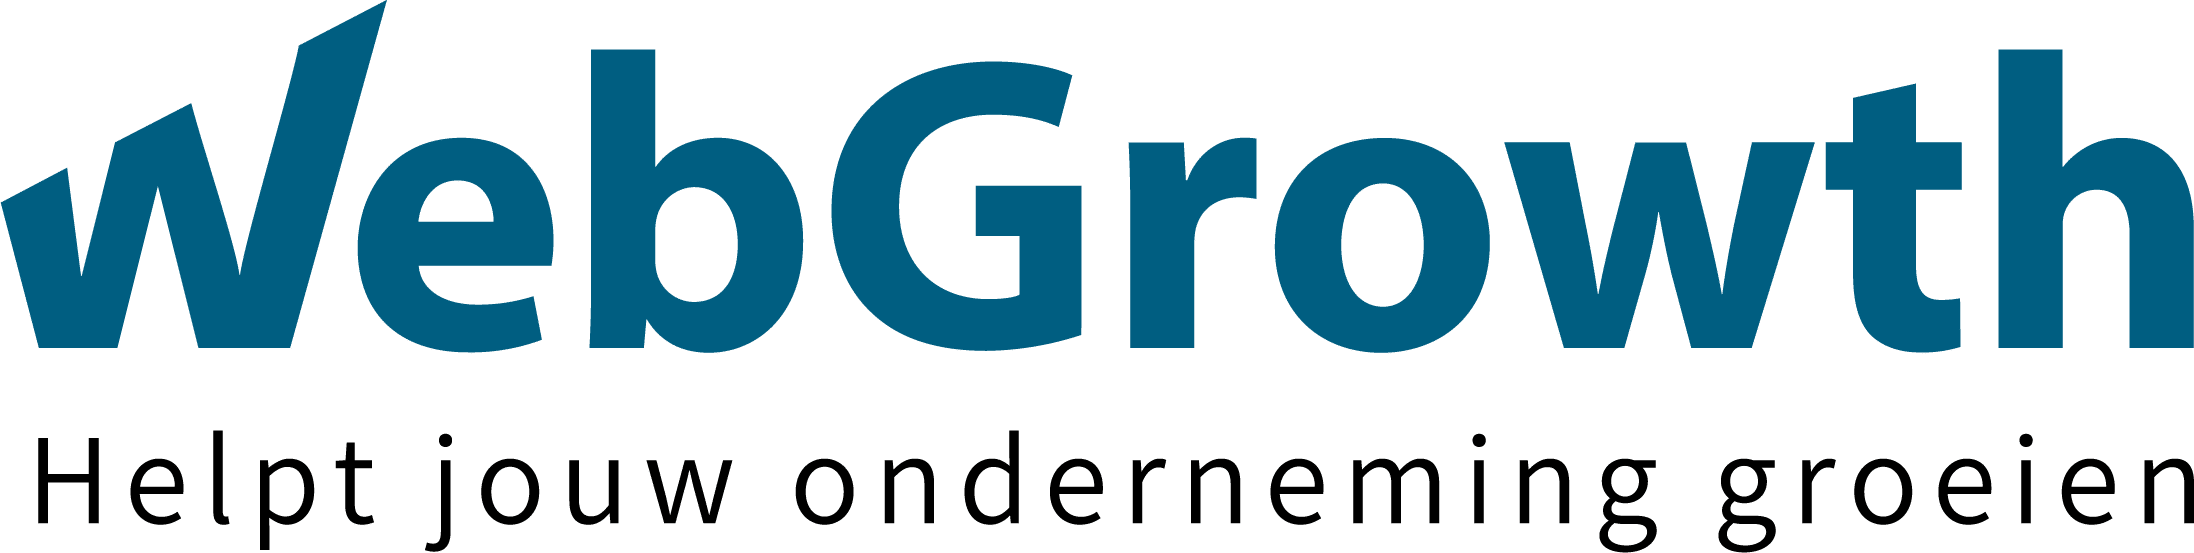 WebGrowth-logo